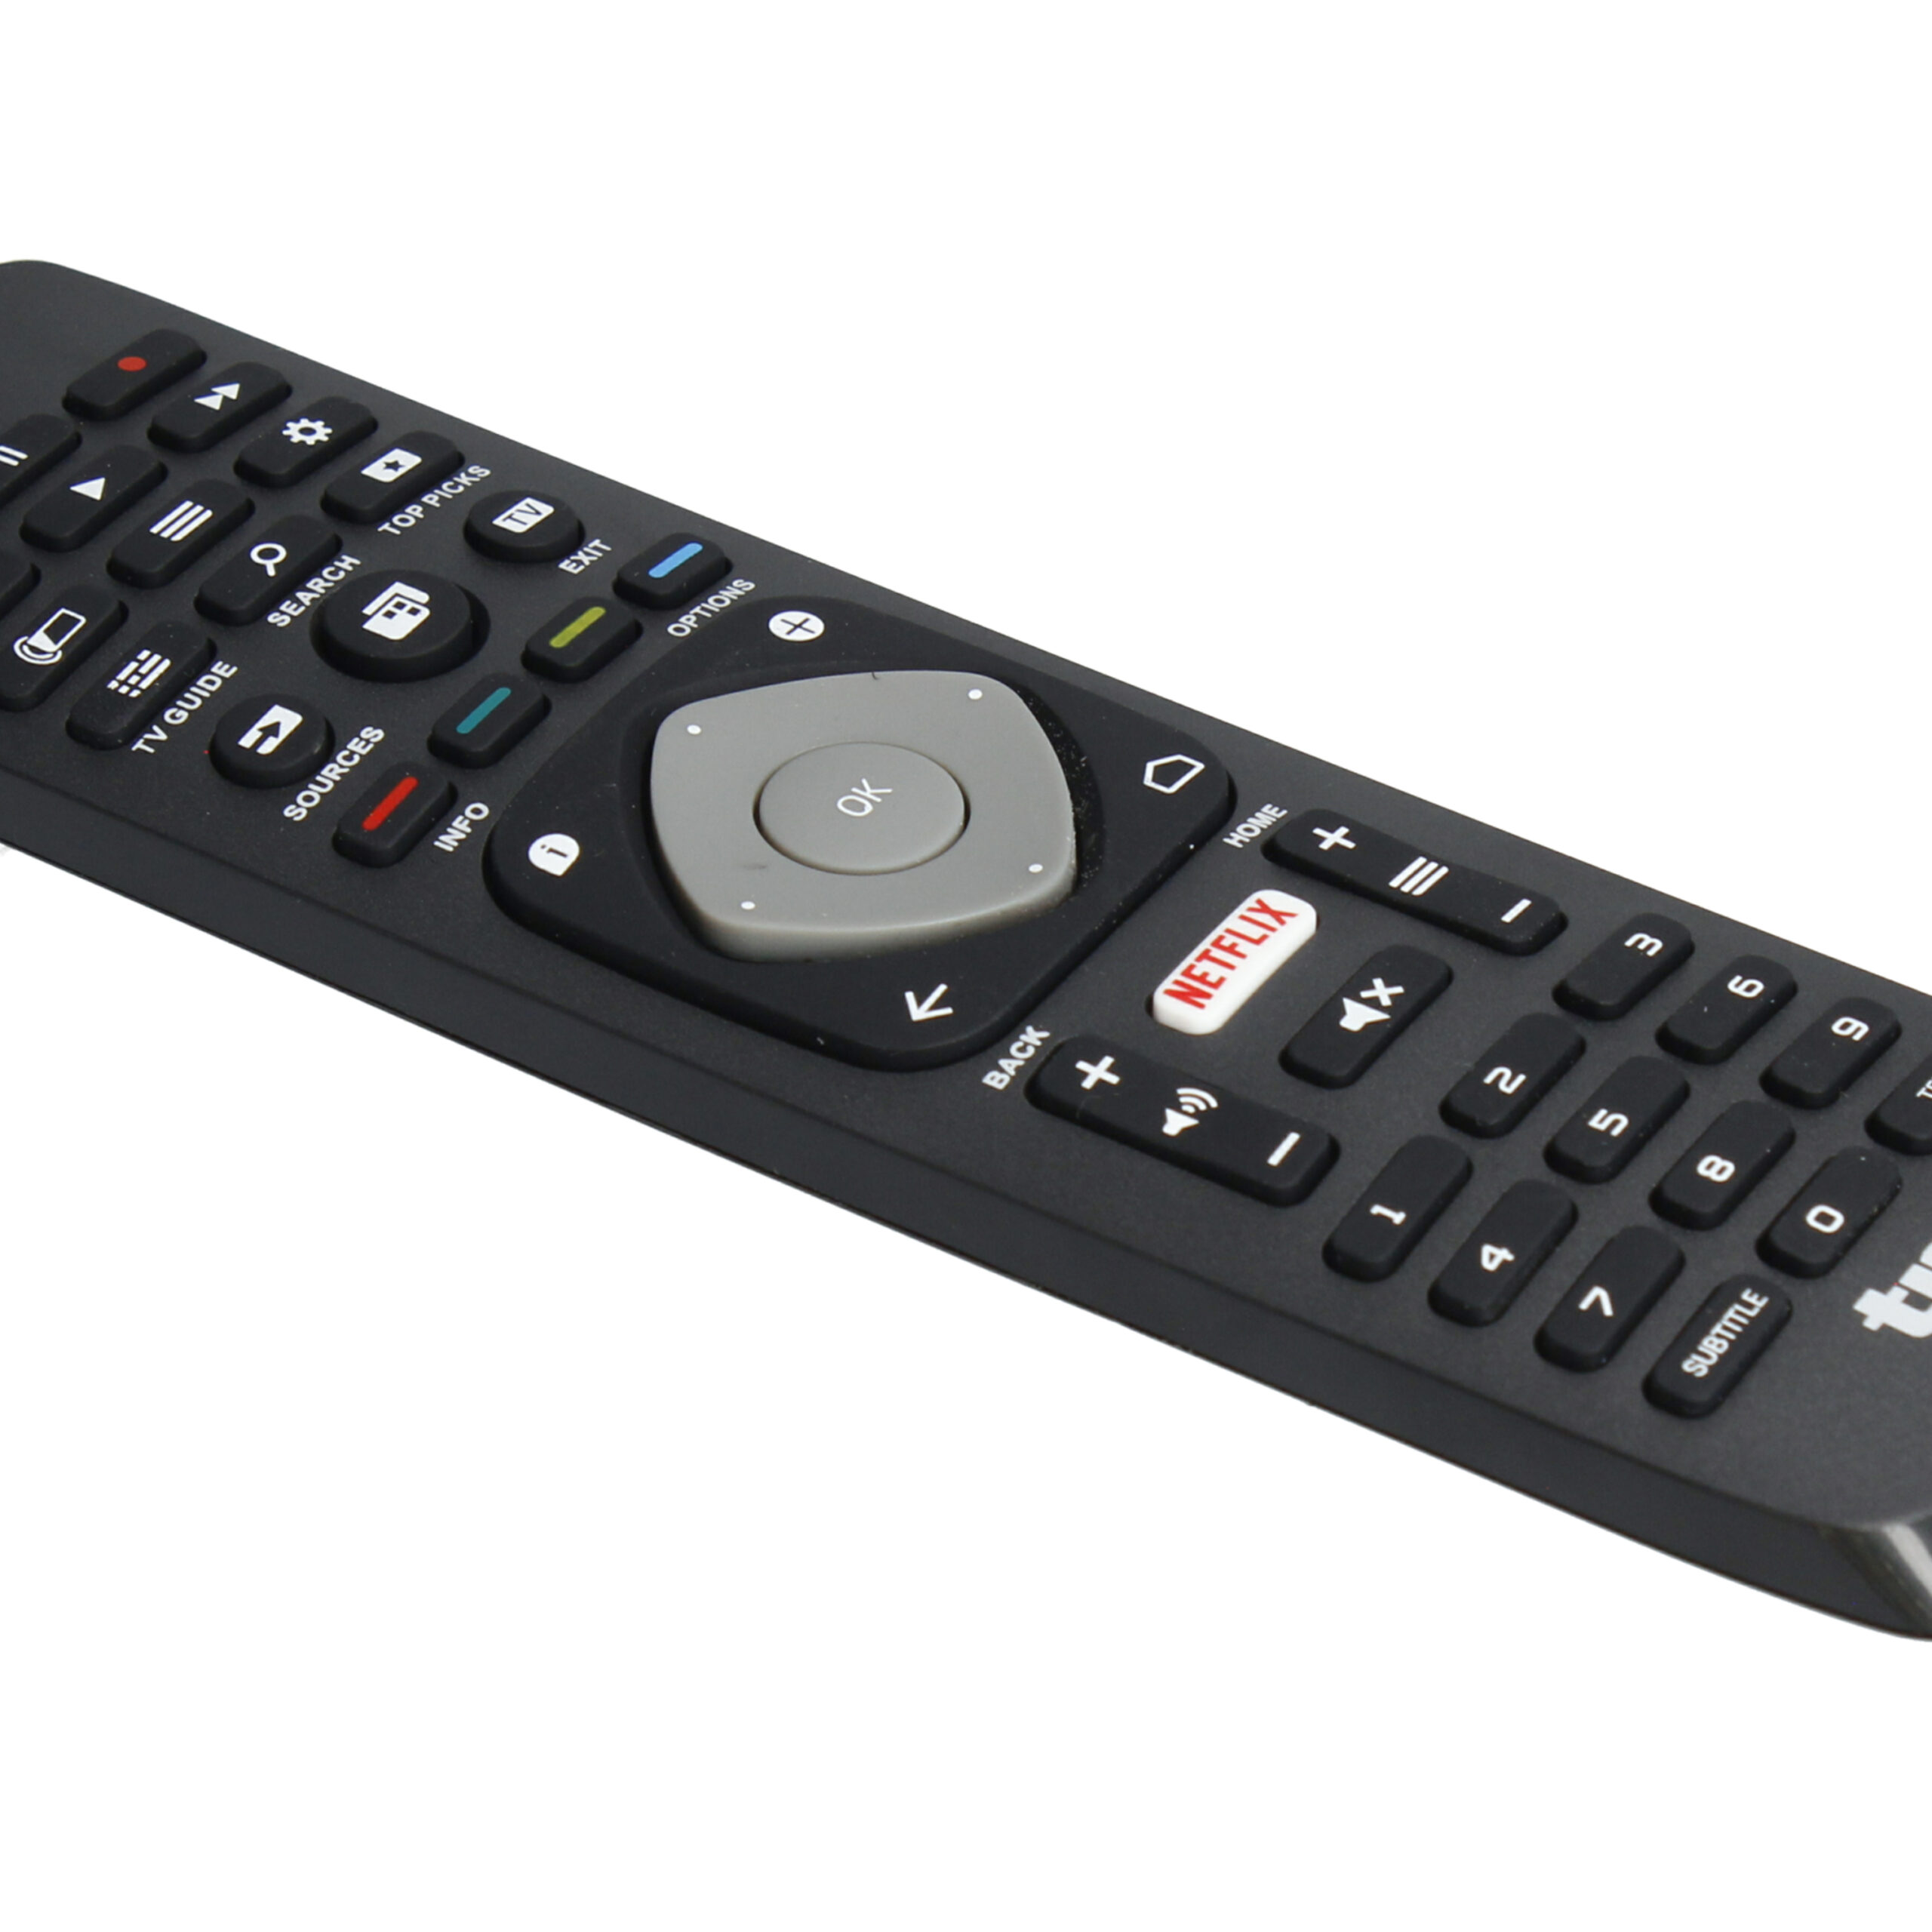 Mando a distancia para televisor Philips, RM-L1225 compatible con RC7812  RC115300101 RC2543 RC400 RC19036002 2423549001834